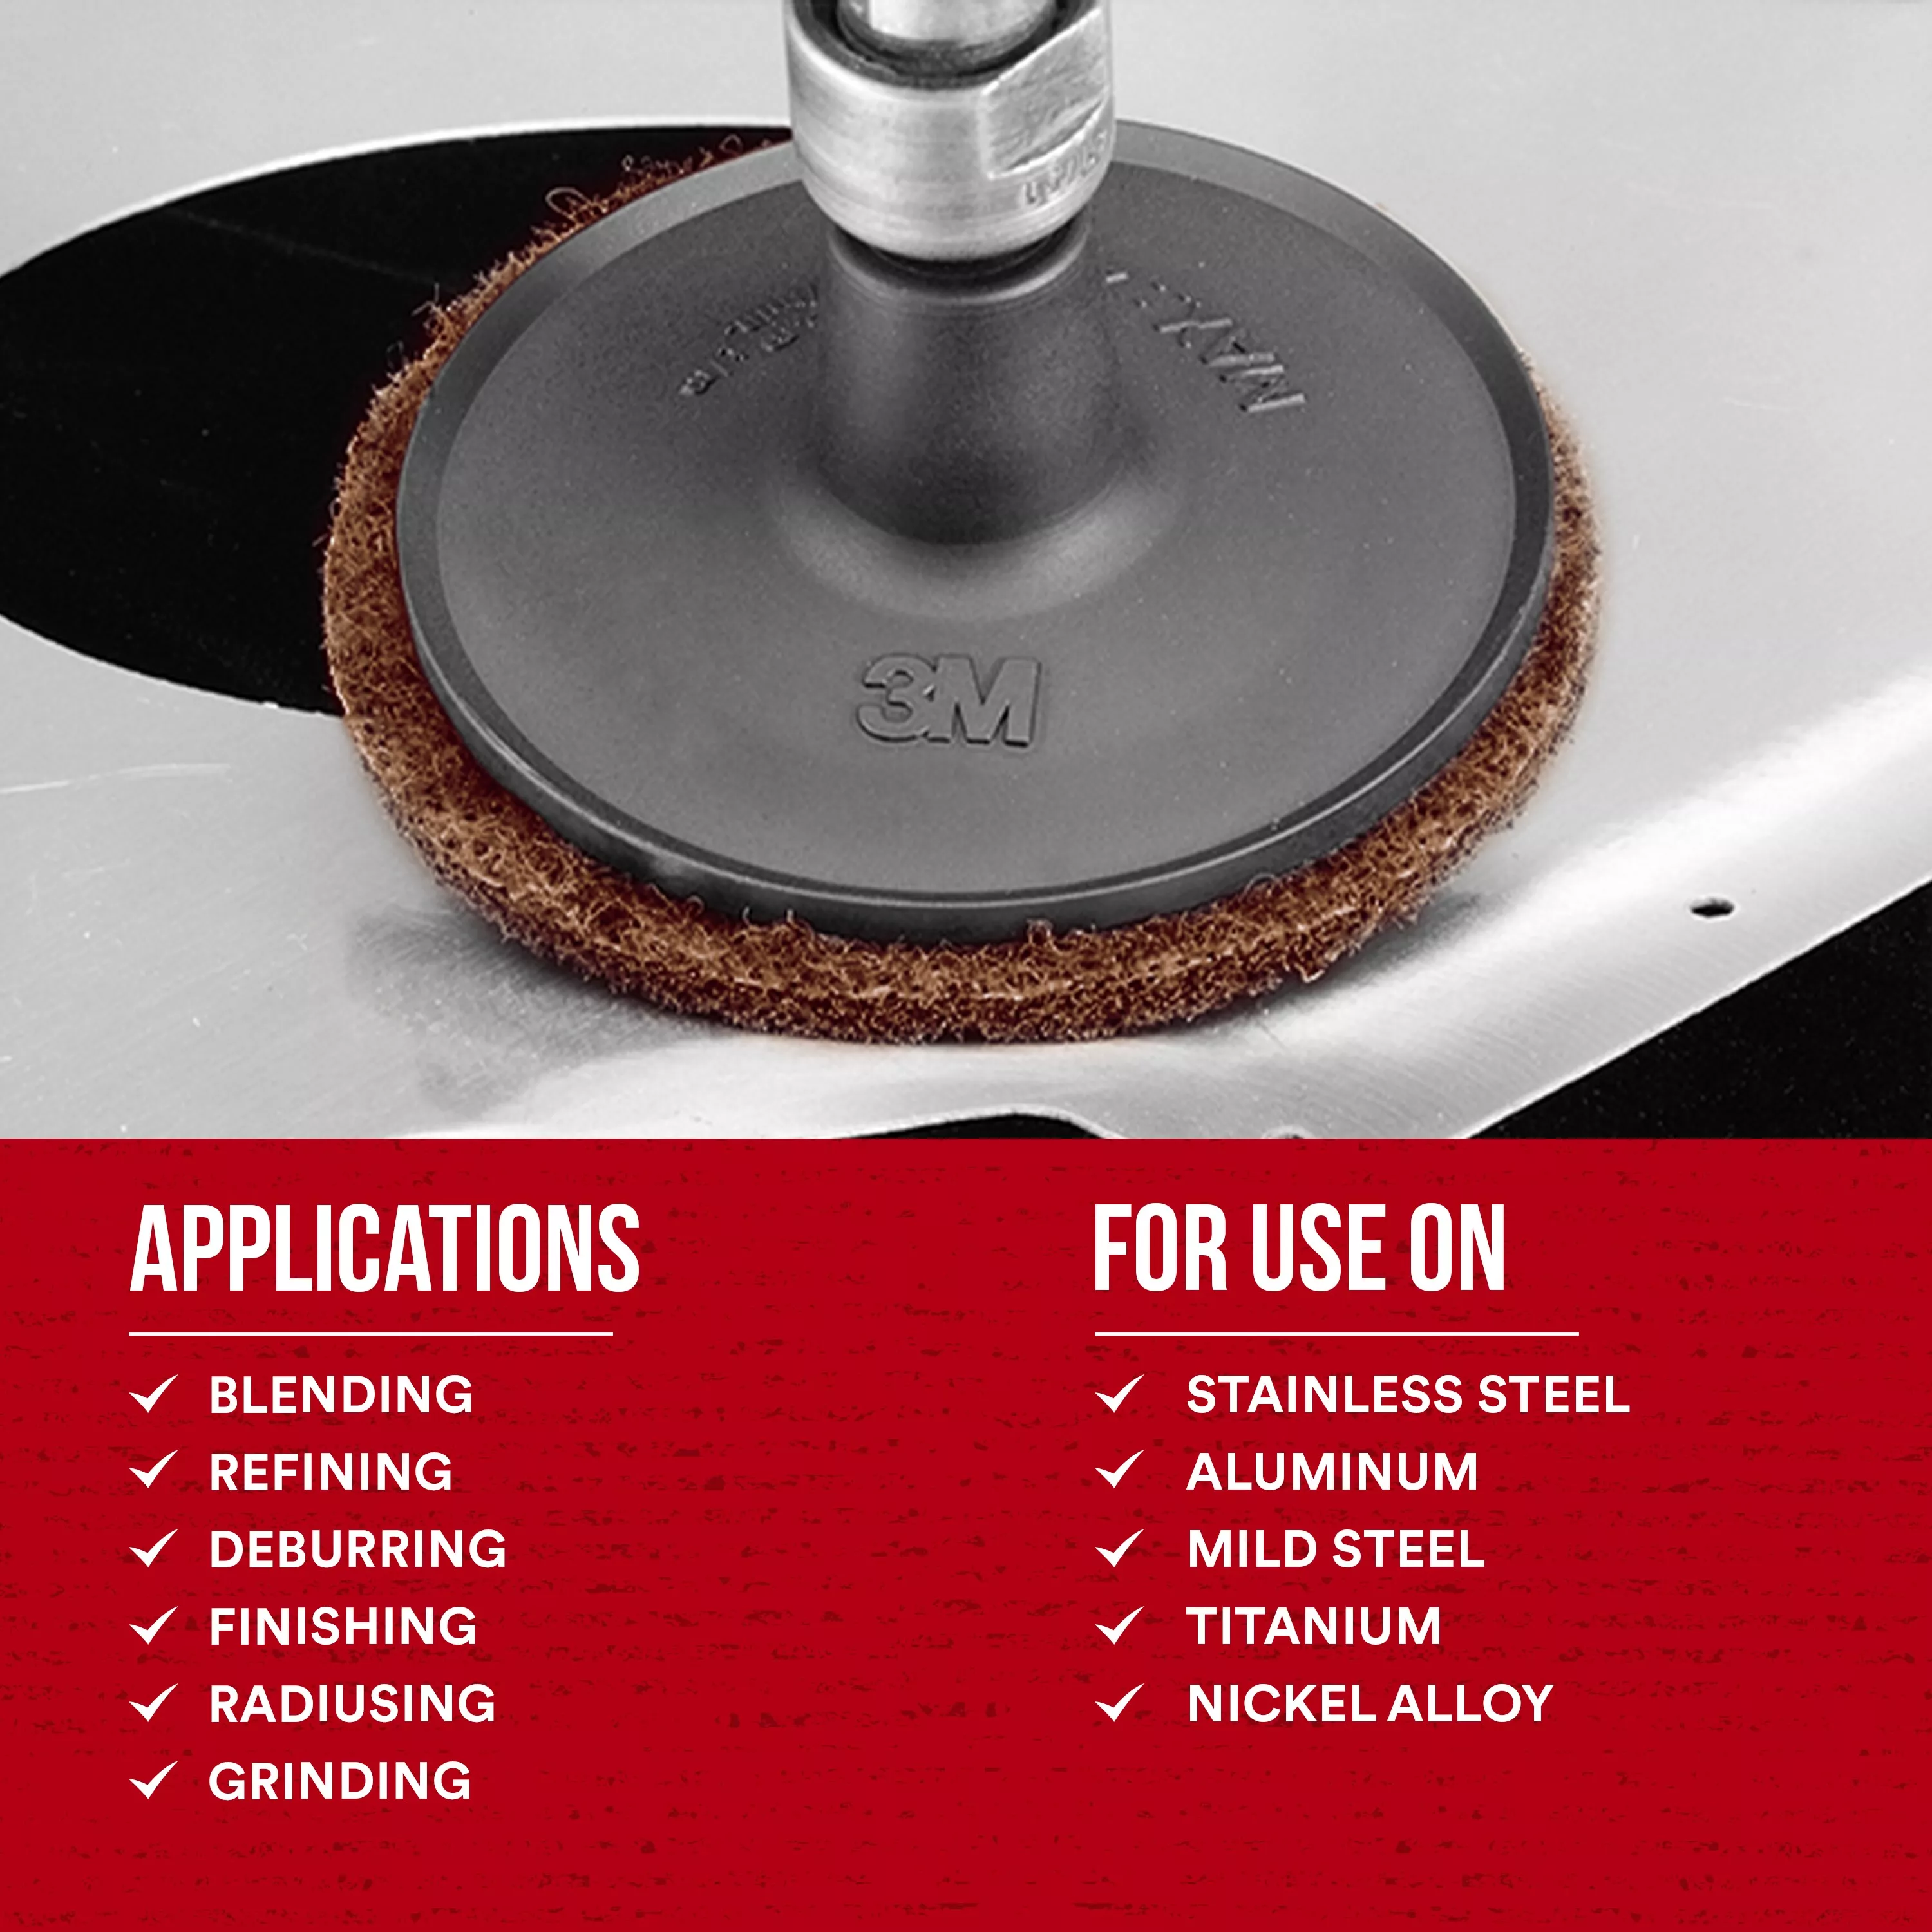 SKU 7100029968 | Scotch-Brite™ Roloc™ SL Surface Conditioning Disc